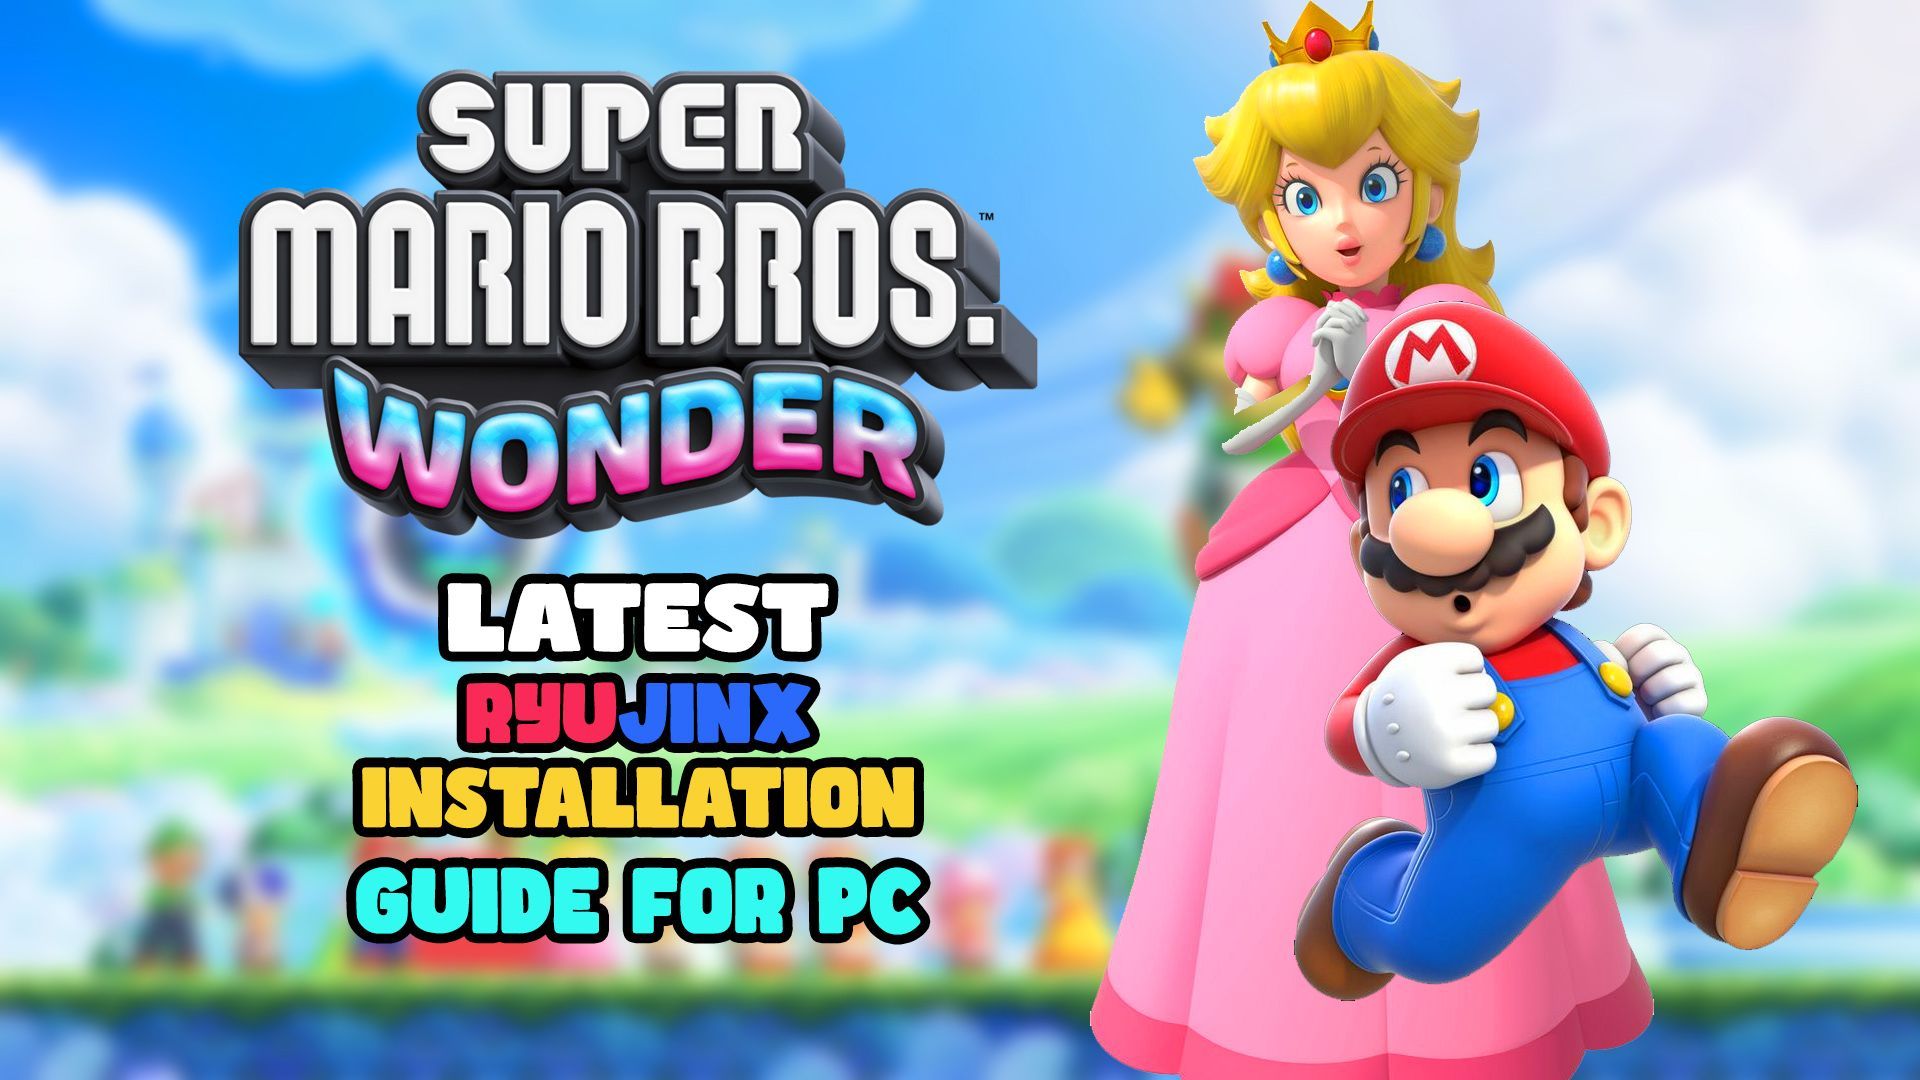 Super Mario Wonder is (already) playable on PC through Ryujinx